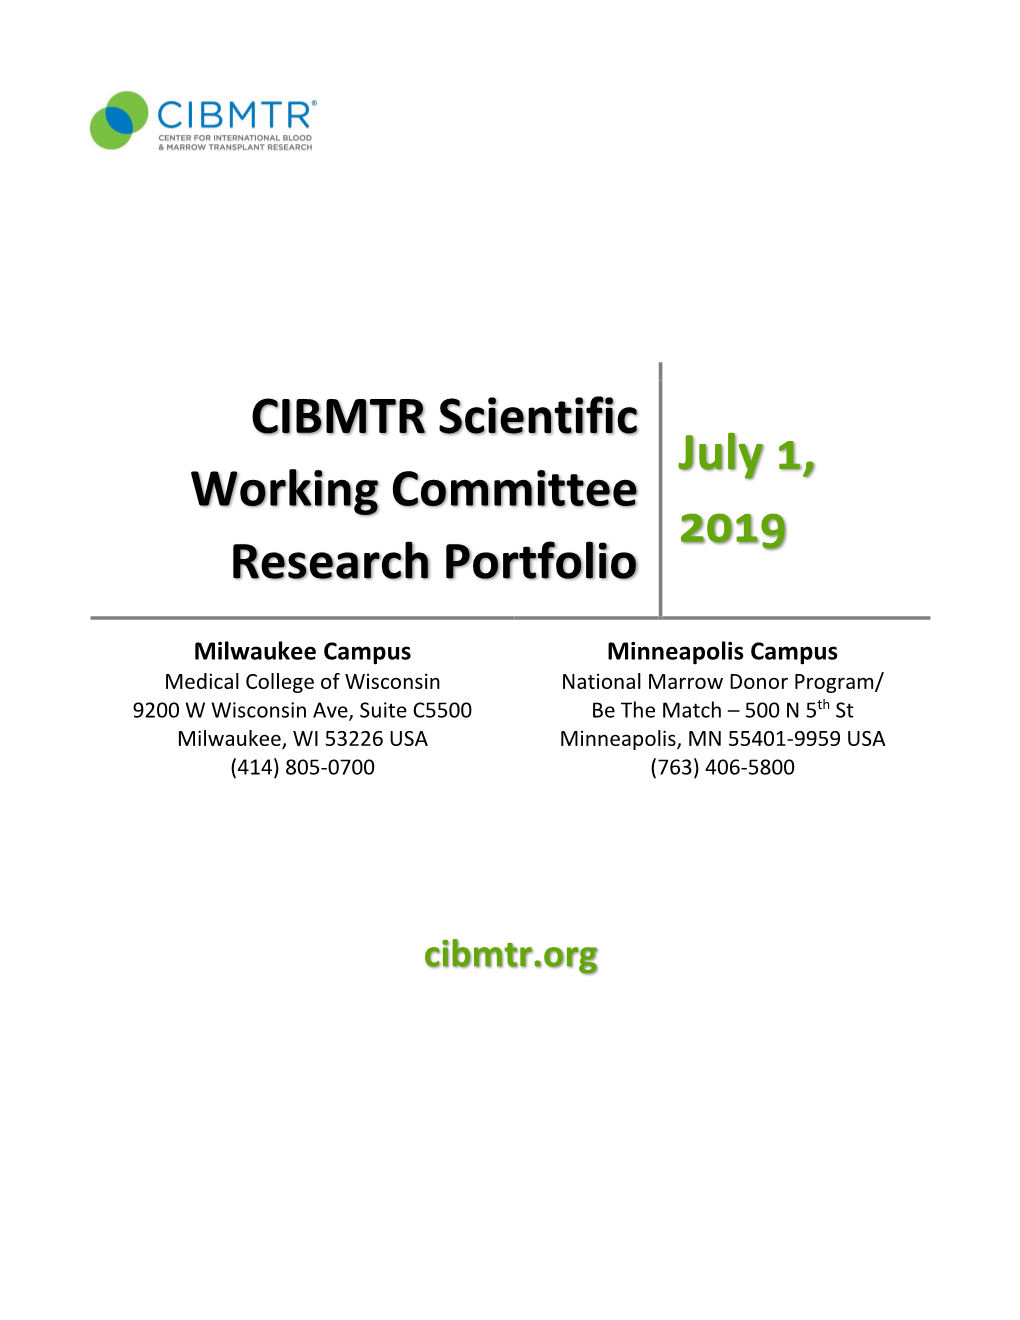 CIBMTR Scientific Working Committee Research Portfolio July 1, 2019